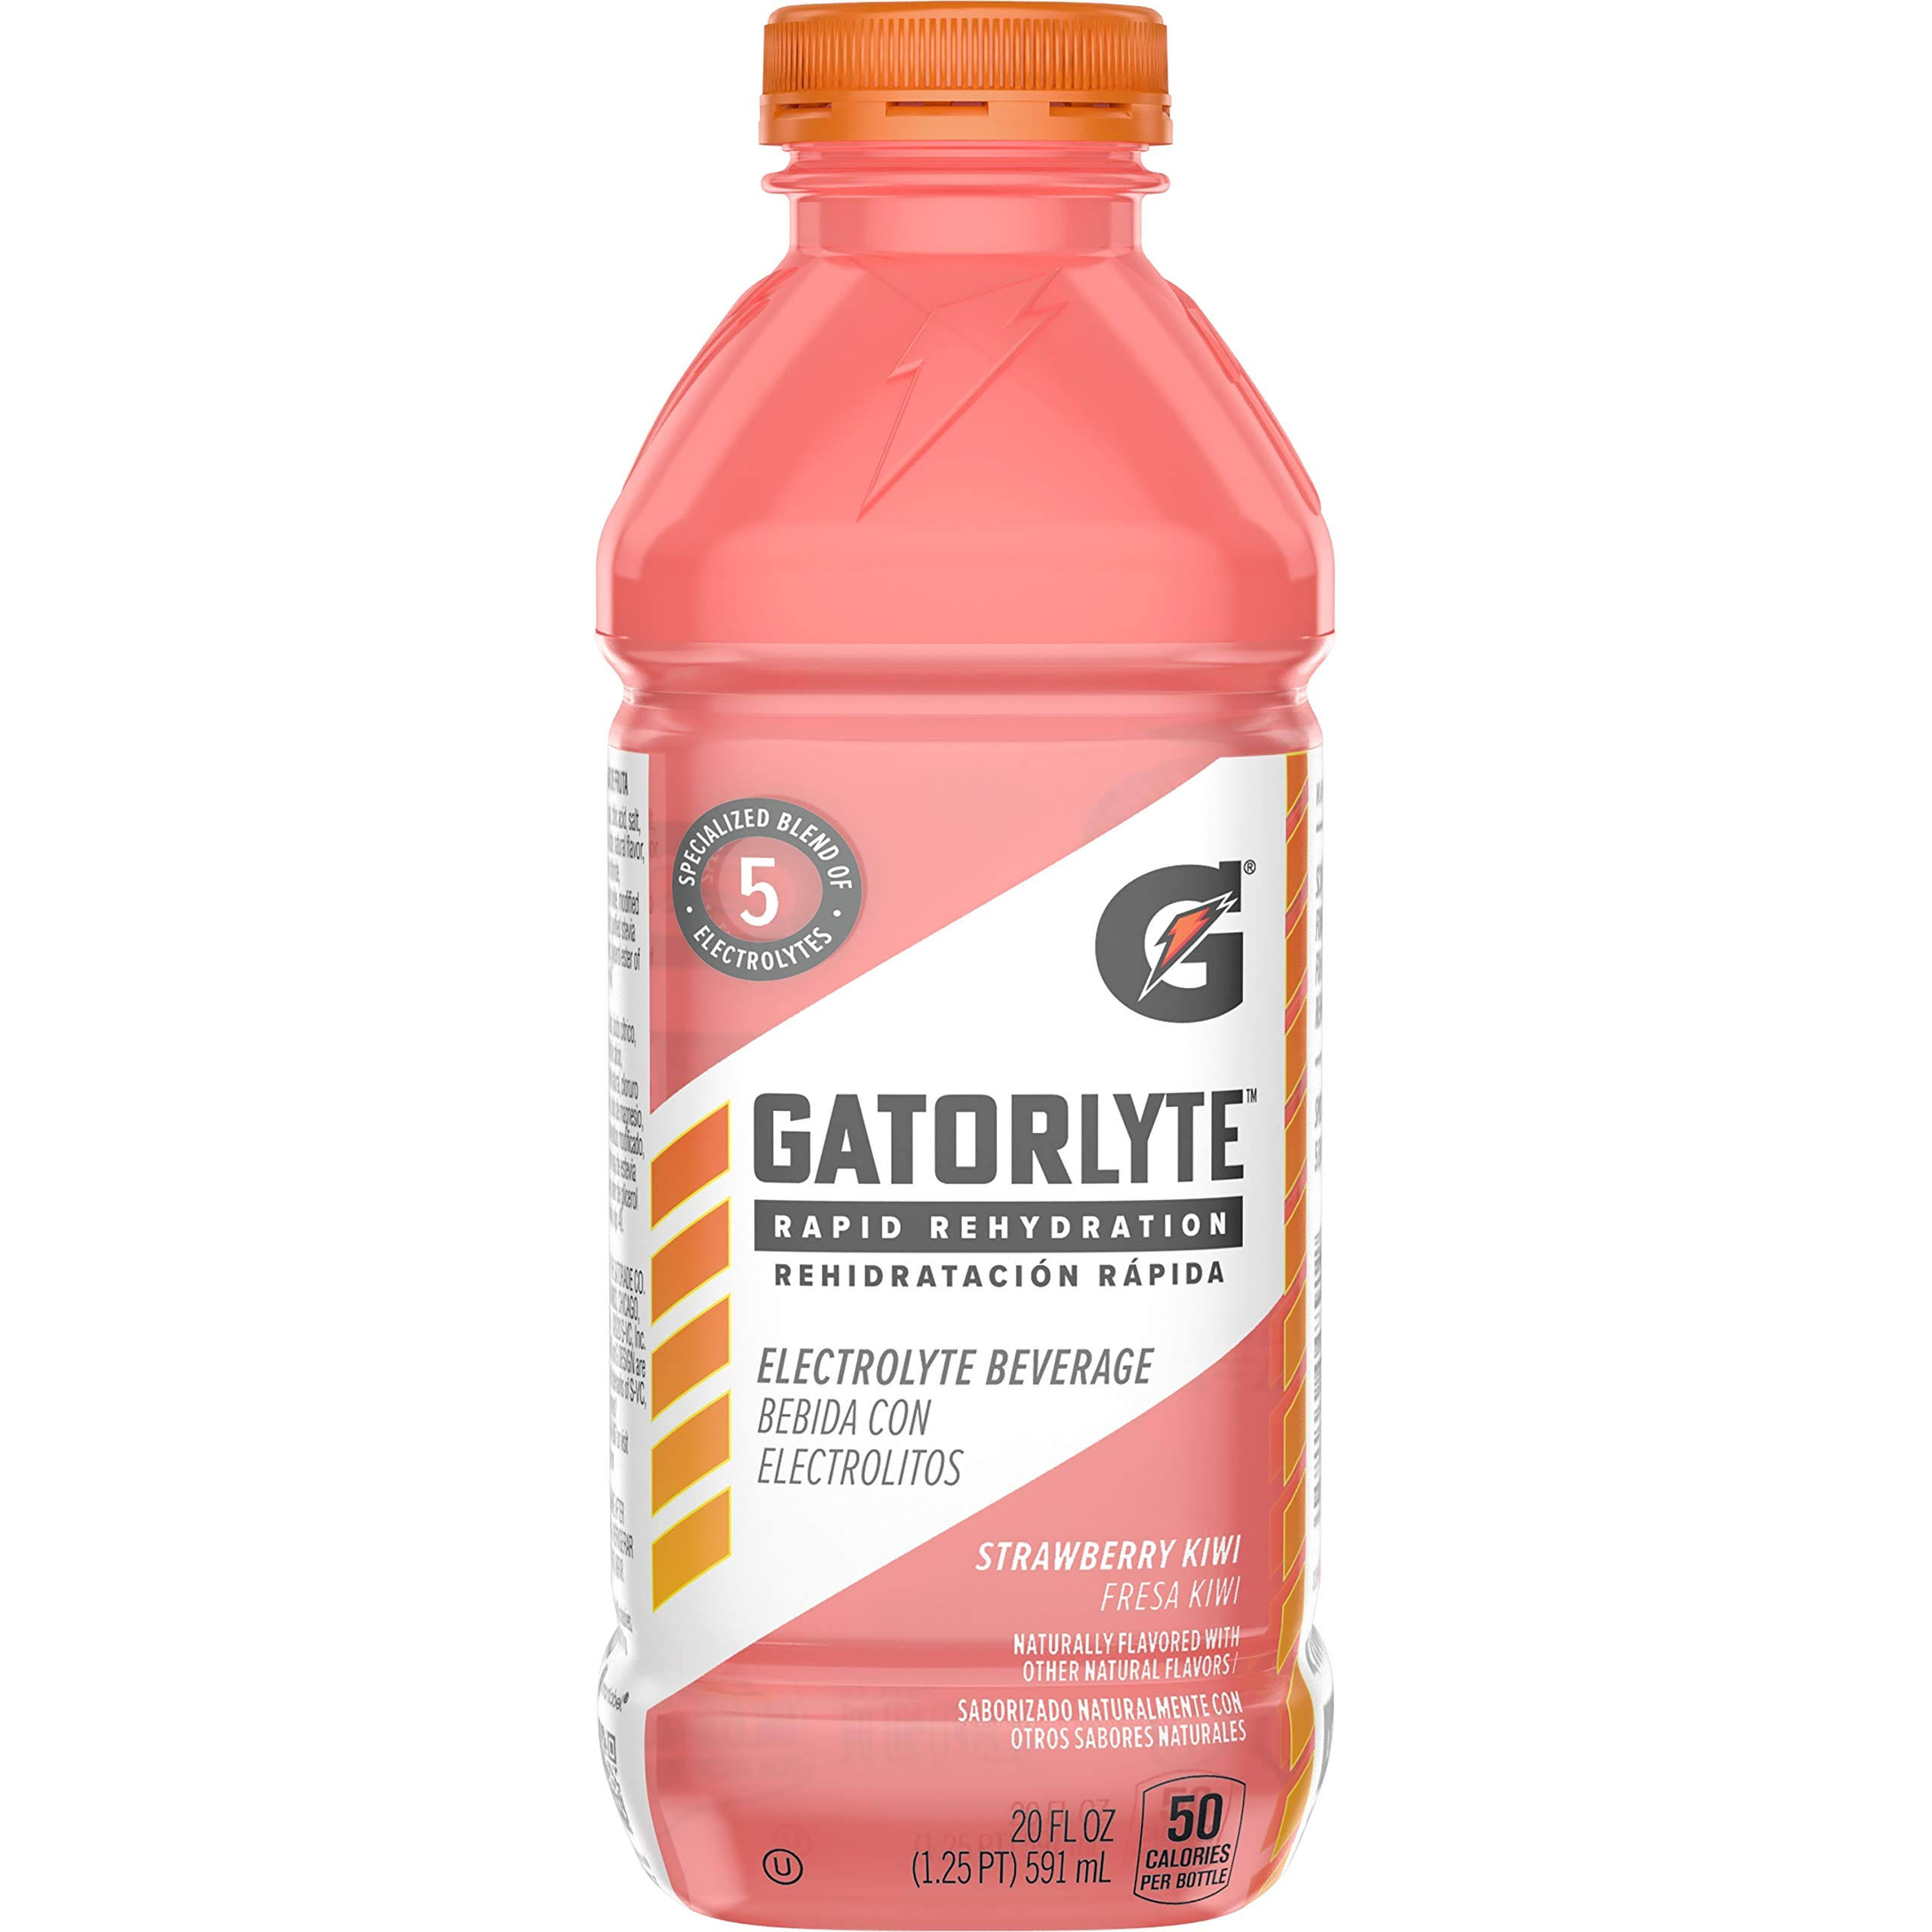 Gatorade Gatorlyte Electrolyte Beverage, Rapid Rehydration, Strawberry Kiwi - 20 fl oz